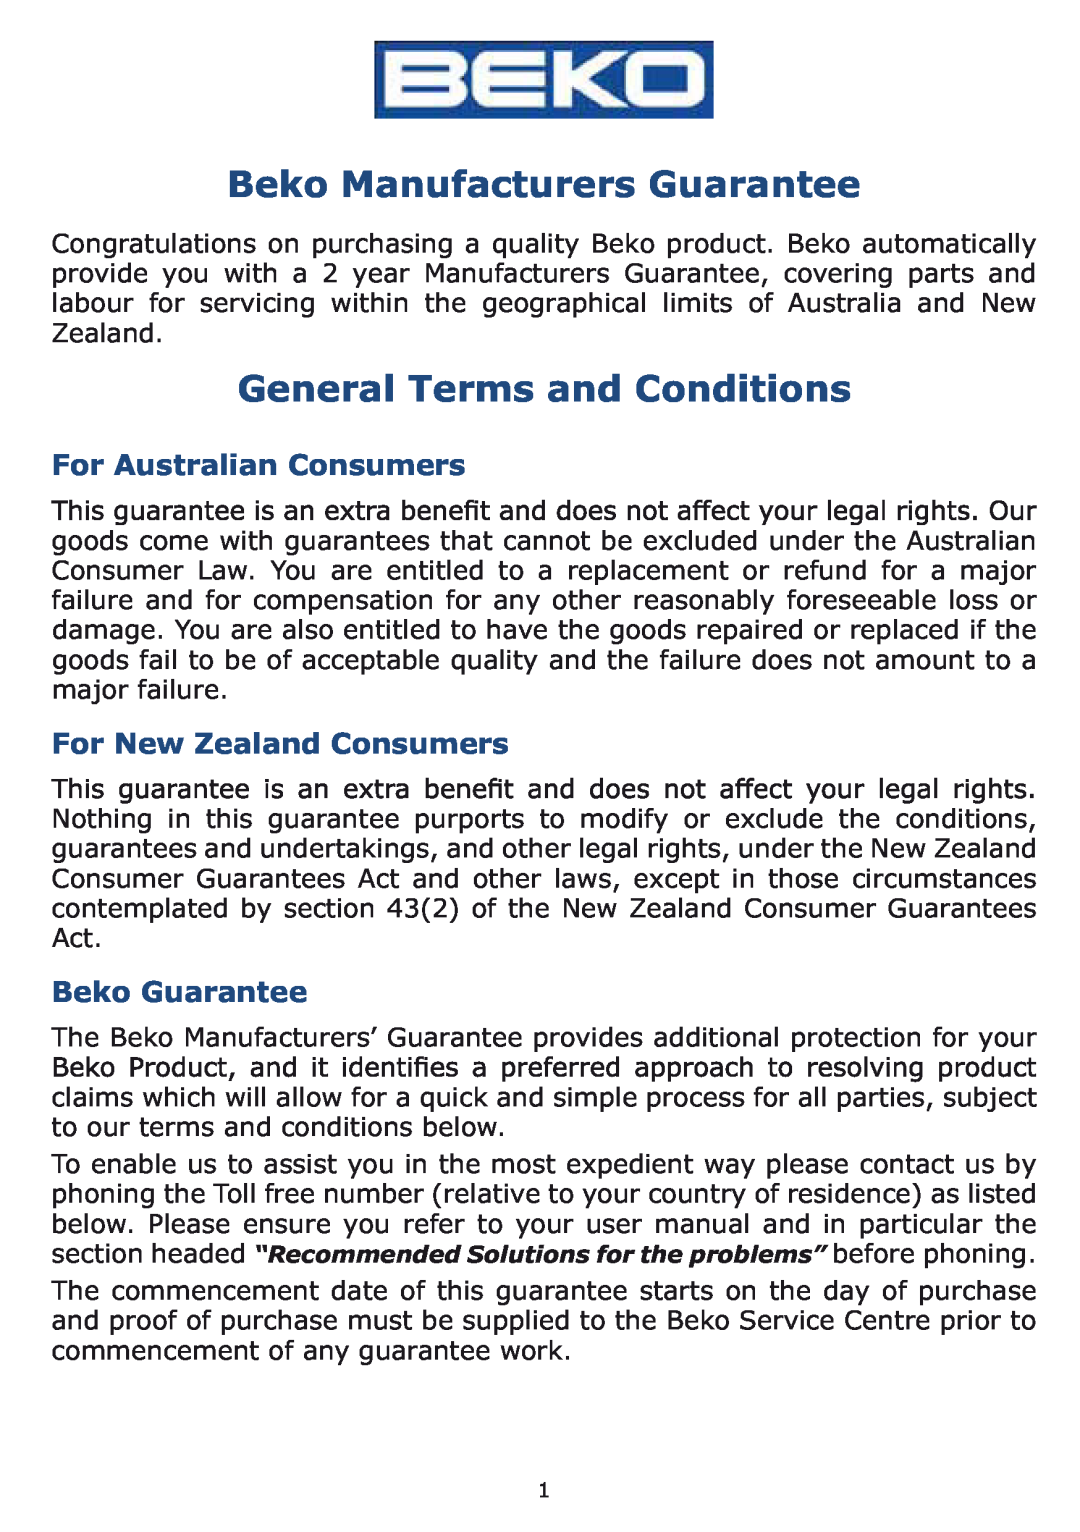 Beko CCB 5140 XA Beko Manufacturers Guarantee, General Terms and Conditions, For Australian Consumers, Beko Guarantee 